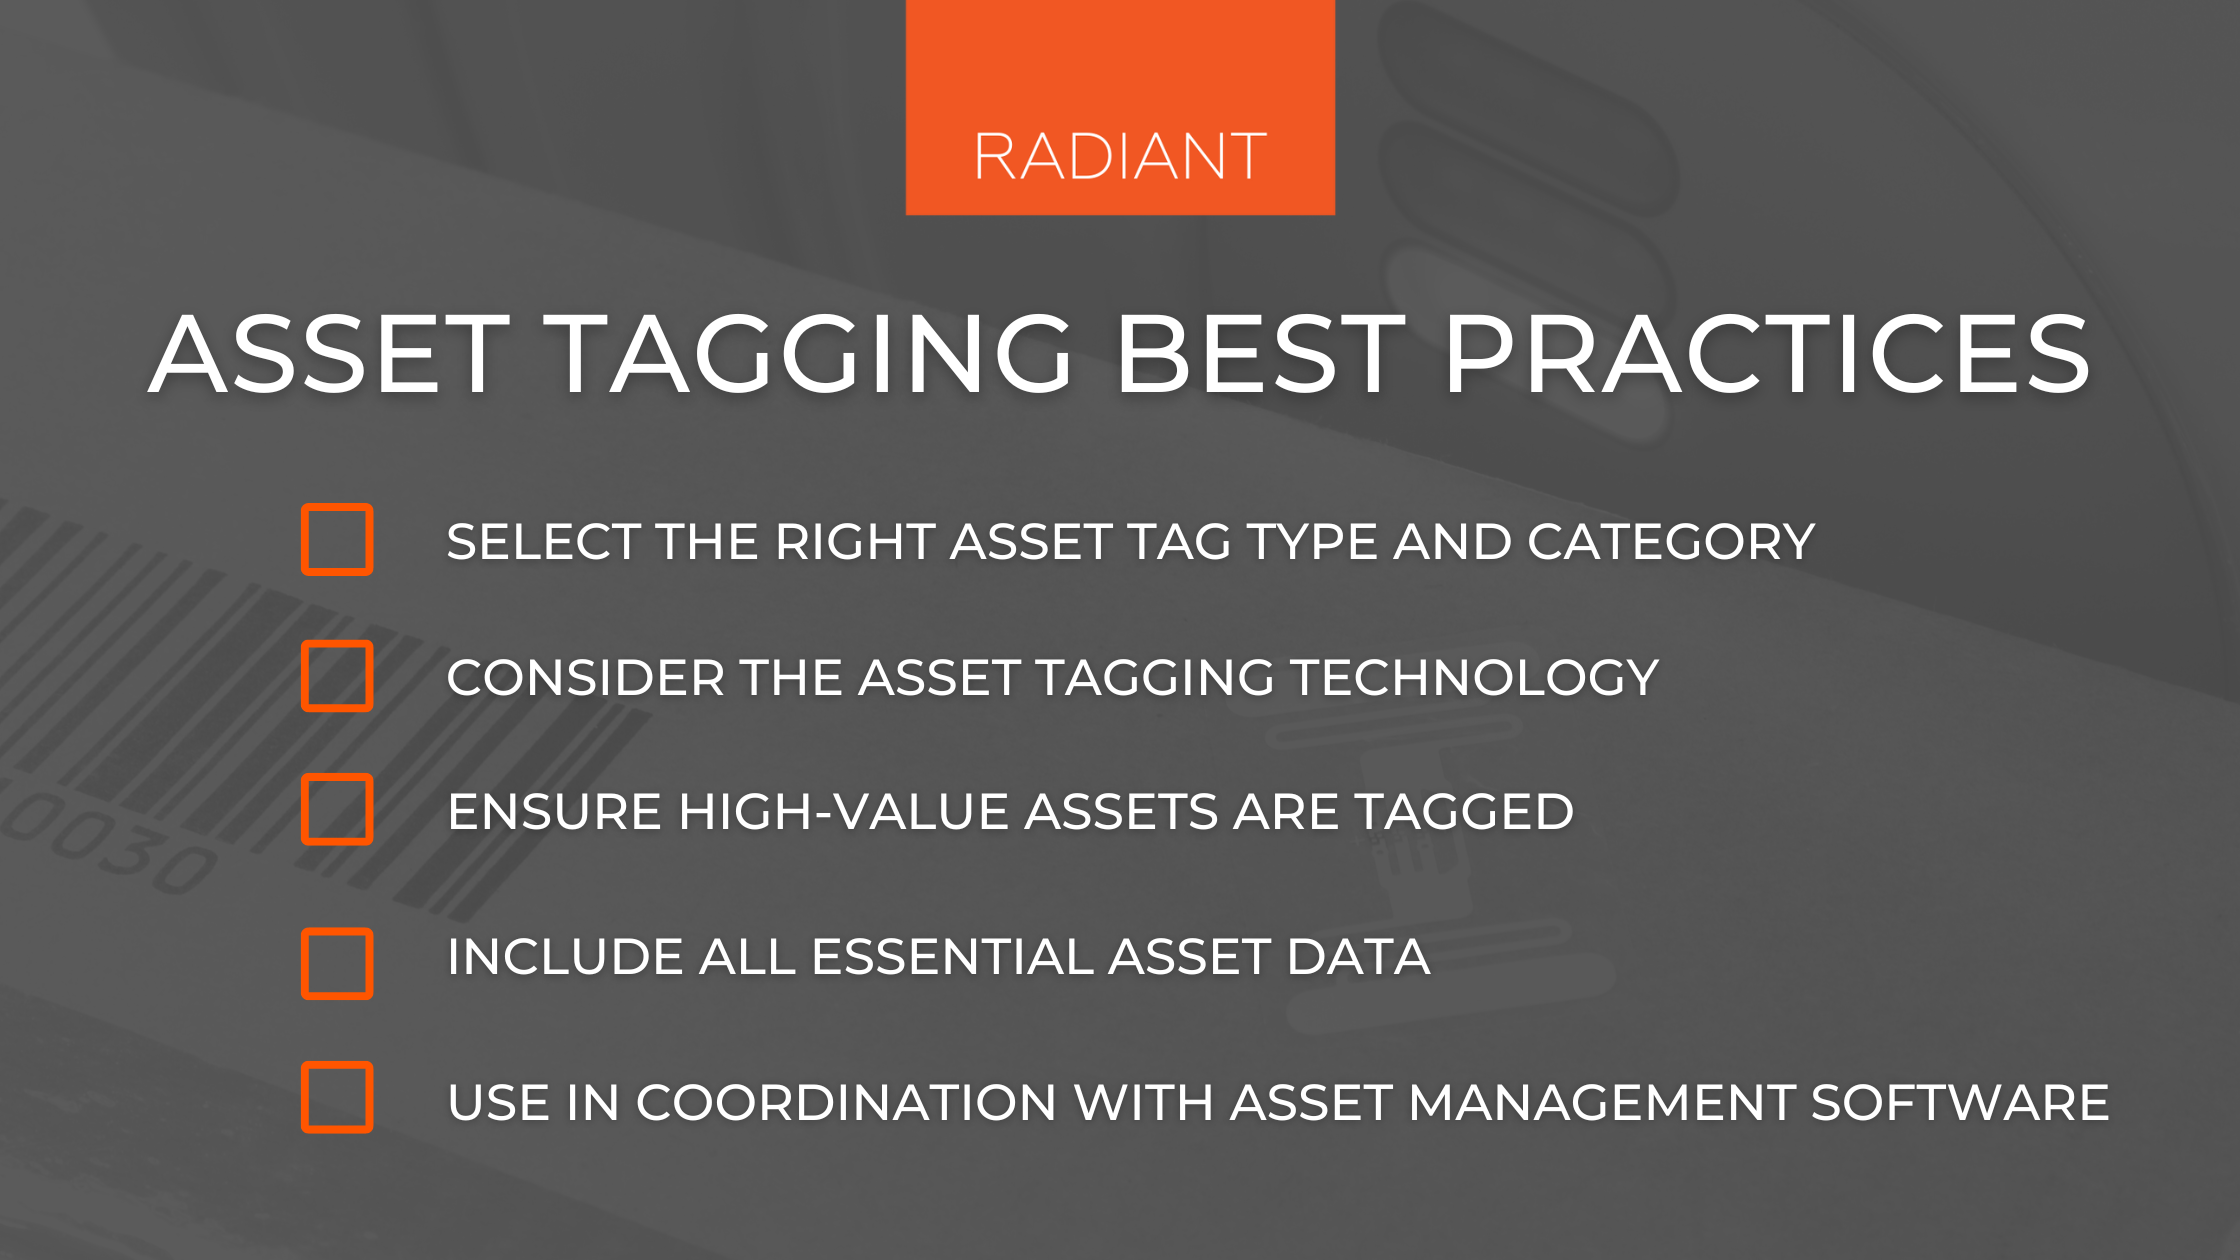 Asset Tagging Best Practices - Asset Tagging - Asset Tagging Best Practice Checklist - Asset Tagging Solutions - Asset Tagging Solution - Asset Tagging Systems - Asset Tagging System - Asset Tags - Asset Tag - Asset Labels - Benefits Of Asset Tagging - Asset Management Software